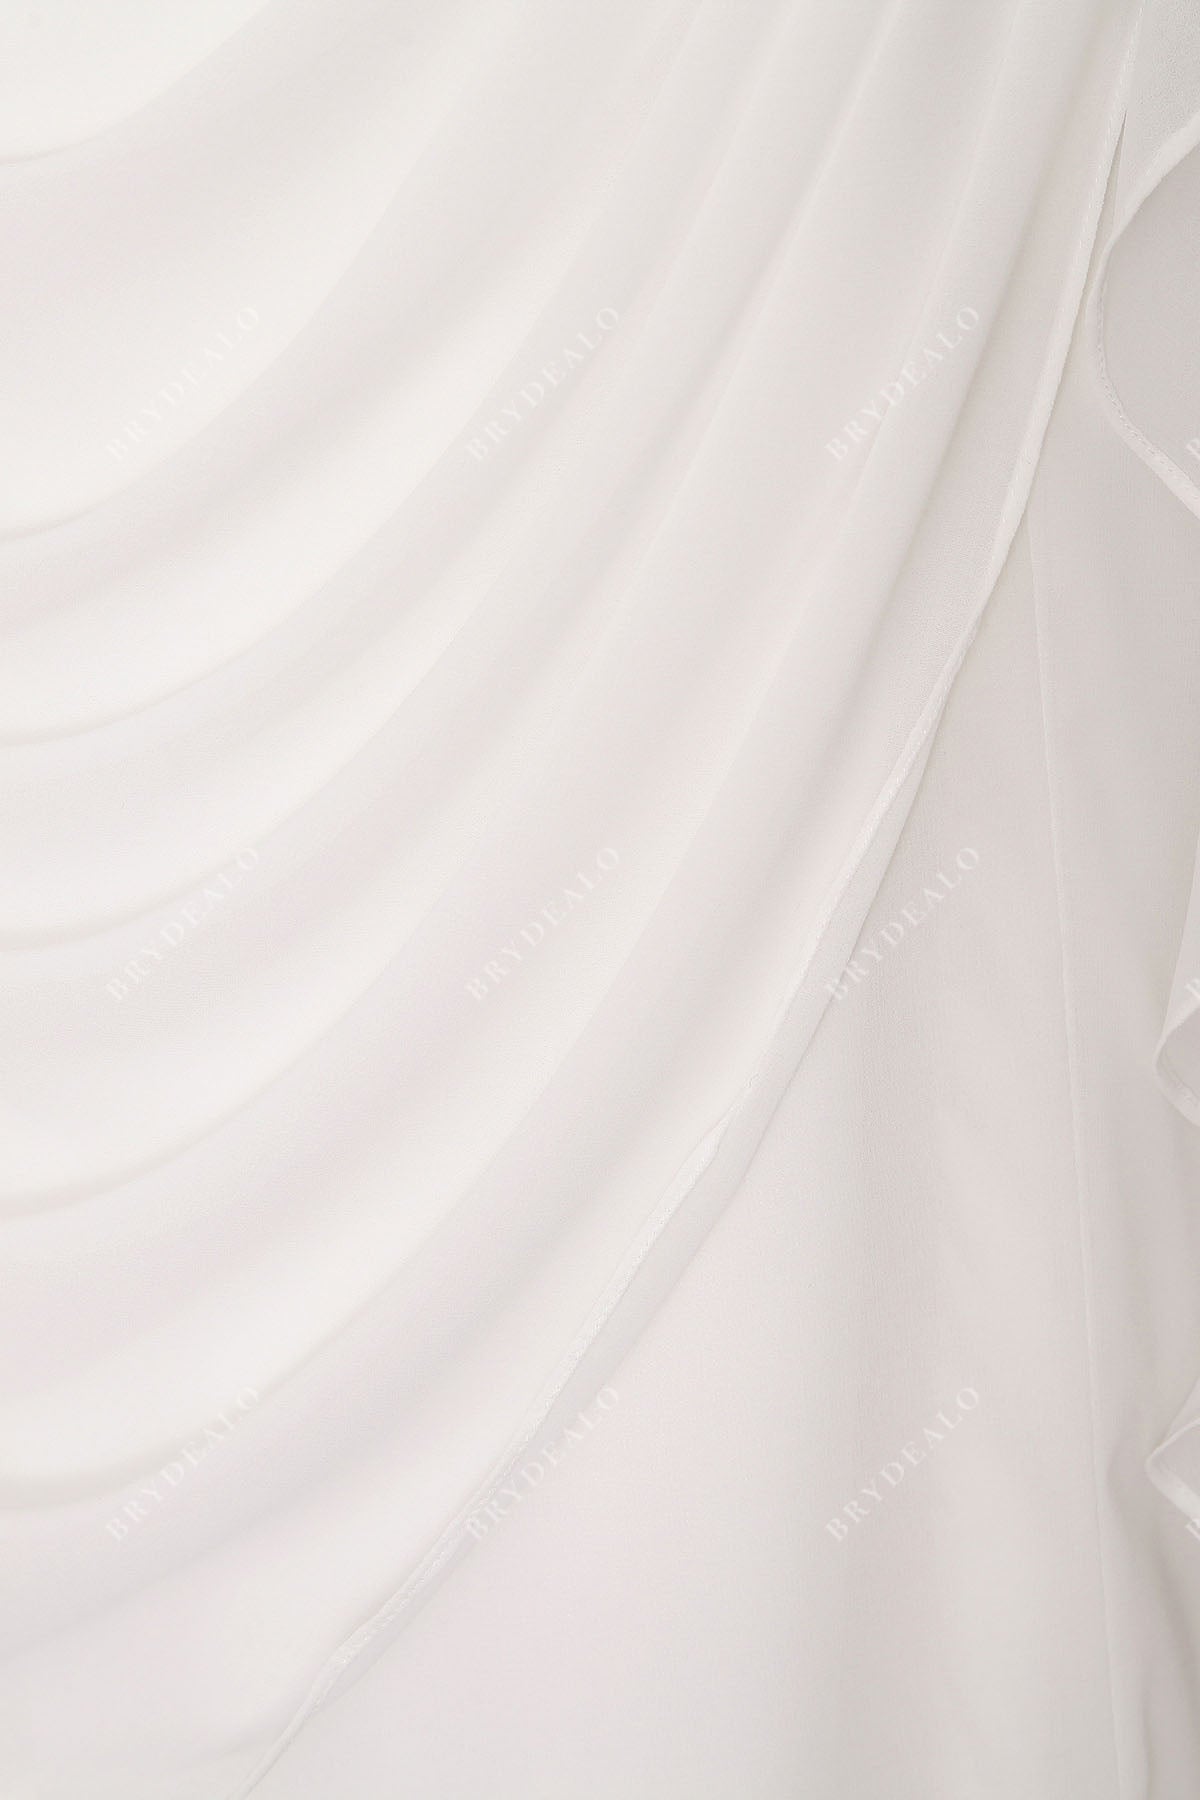 designer draped chiffon bridal gown